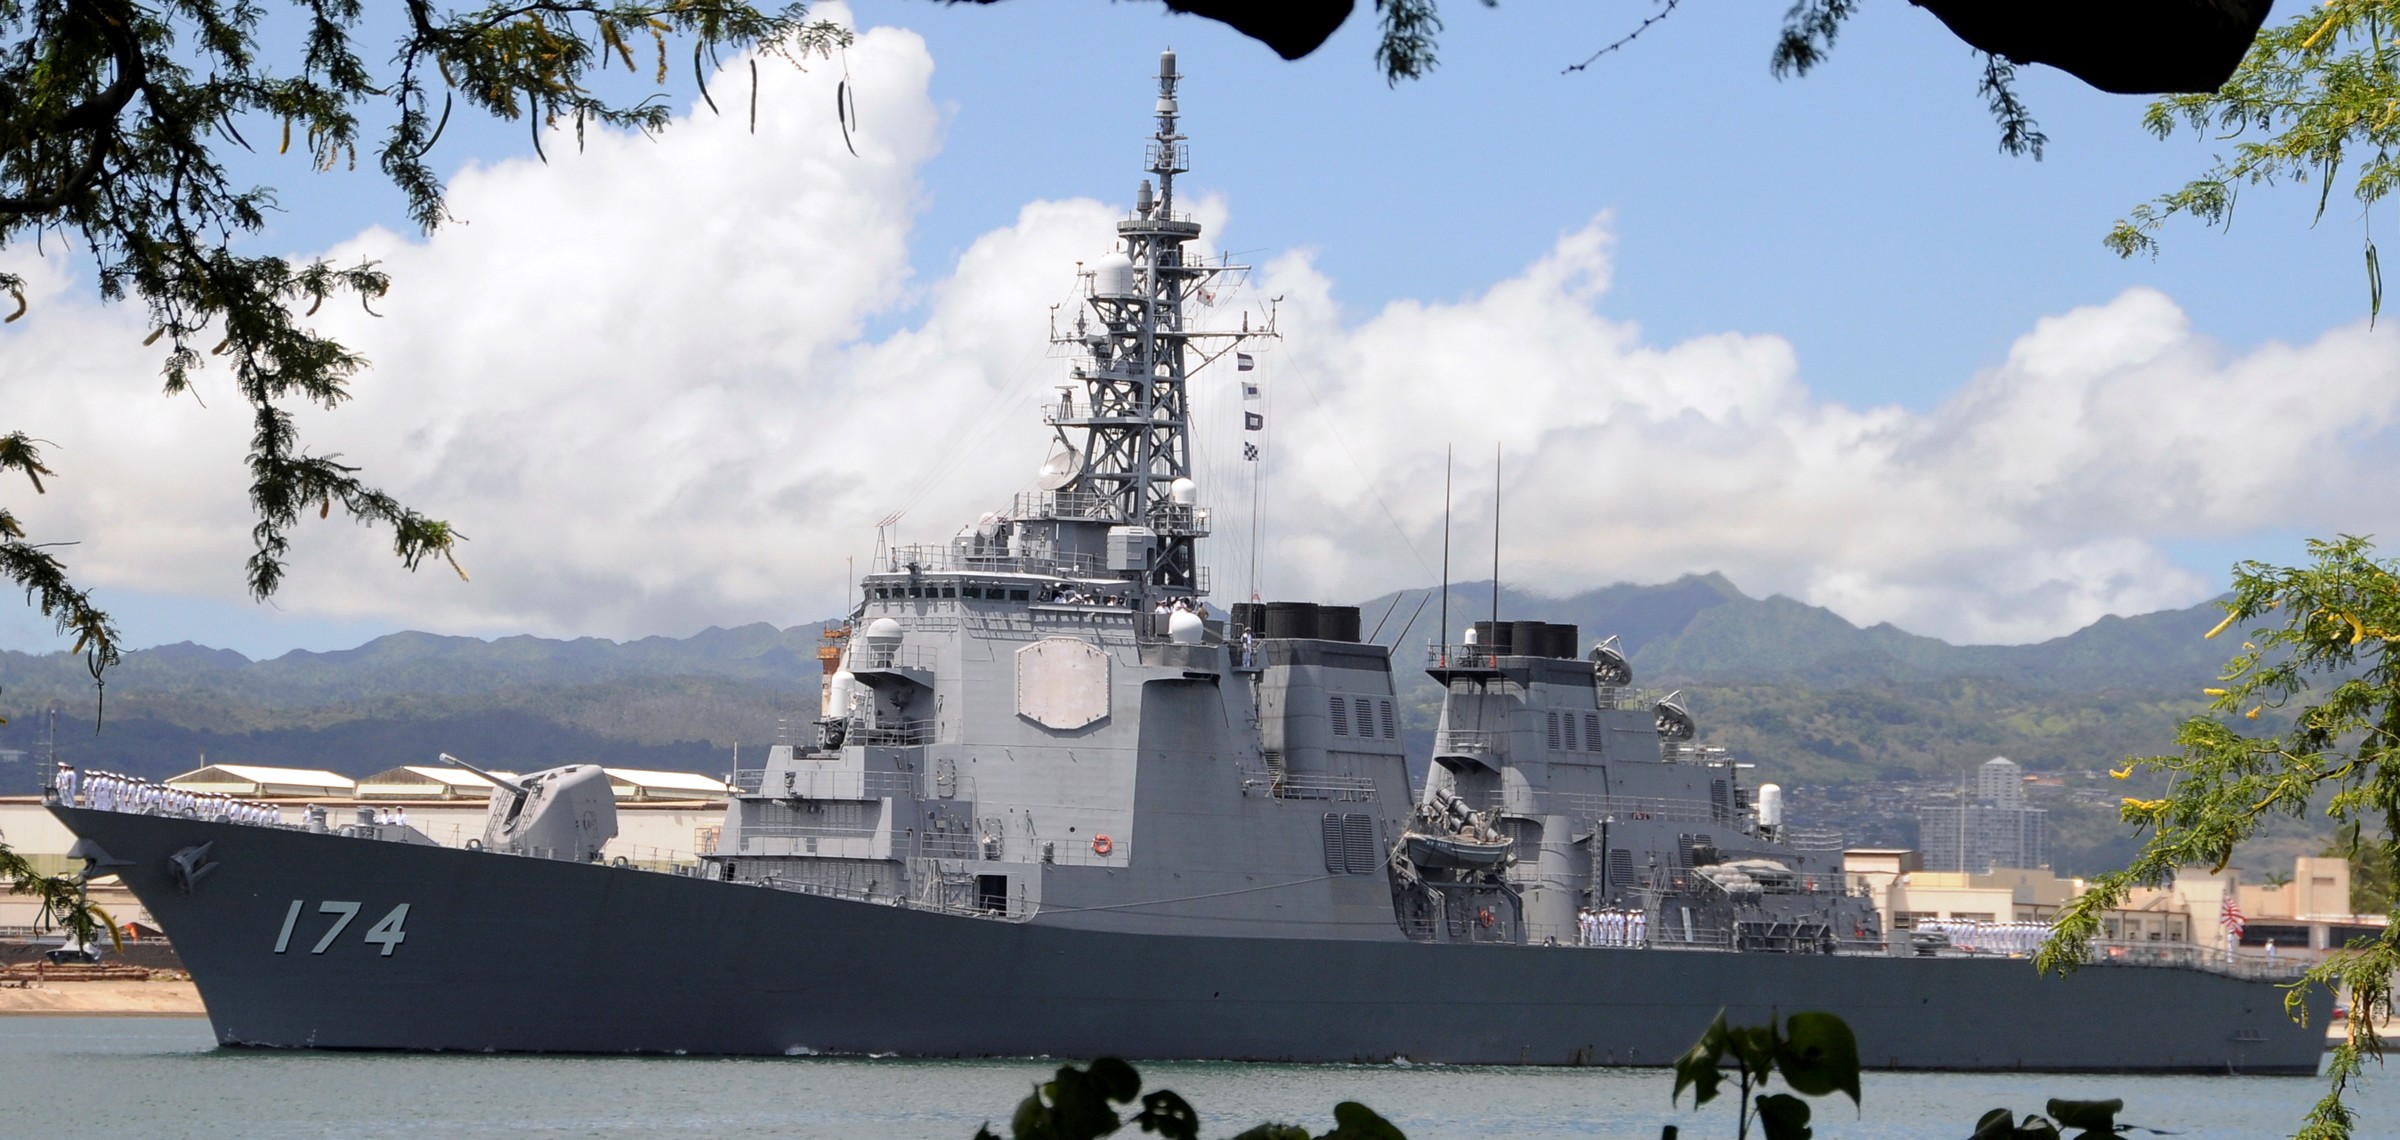 ddg-174 jds kirishima kongou class destroyer japan maritime self defense force jmsdf 22